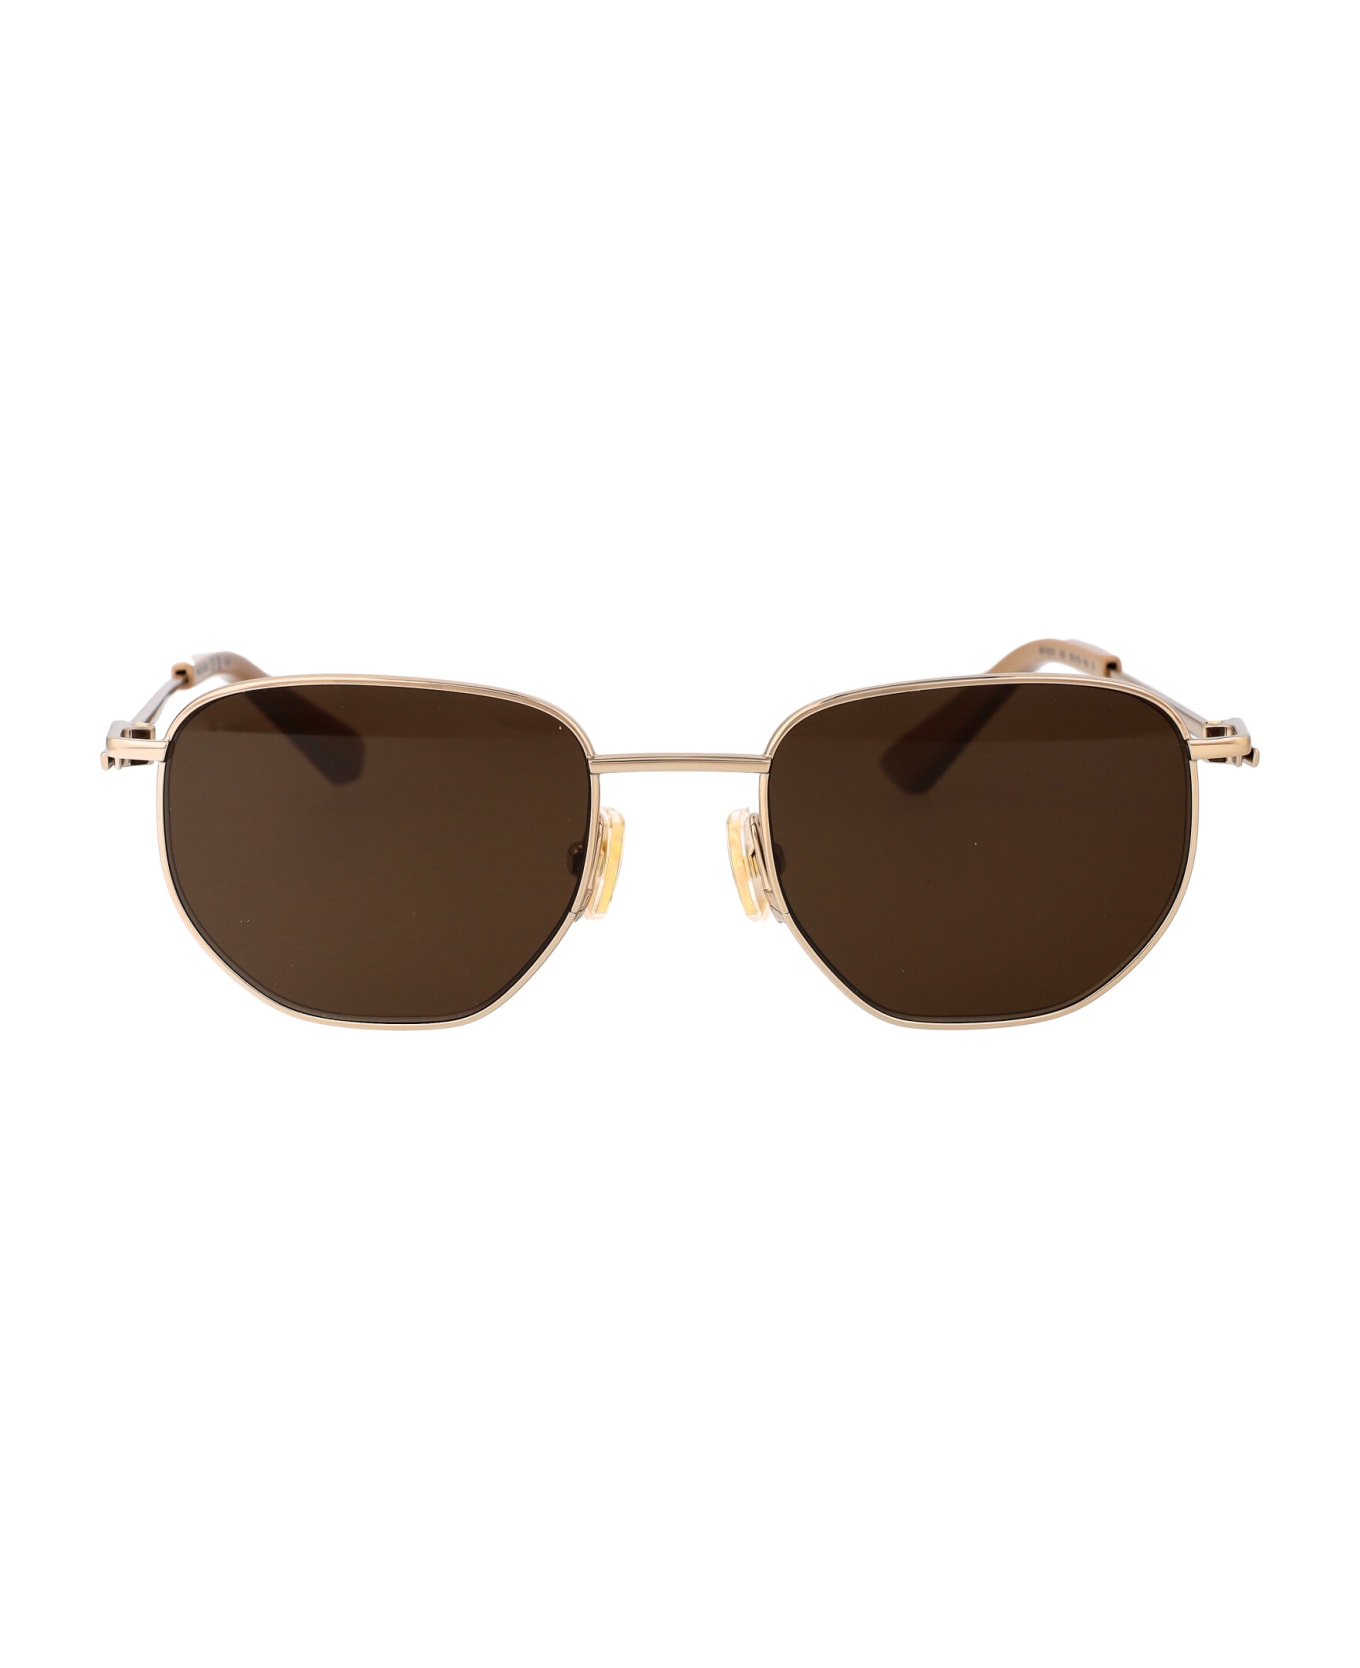 Bottega Veneta Eyewear Bv1301s Sunglasses - 002 GOLD GOLD BROWN